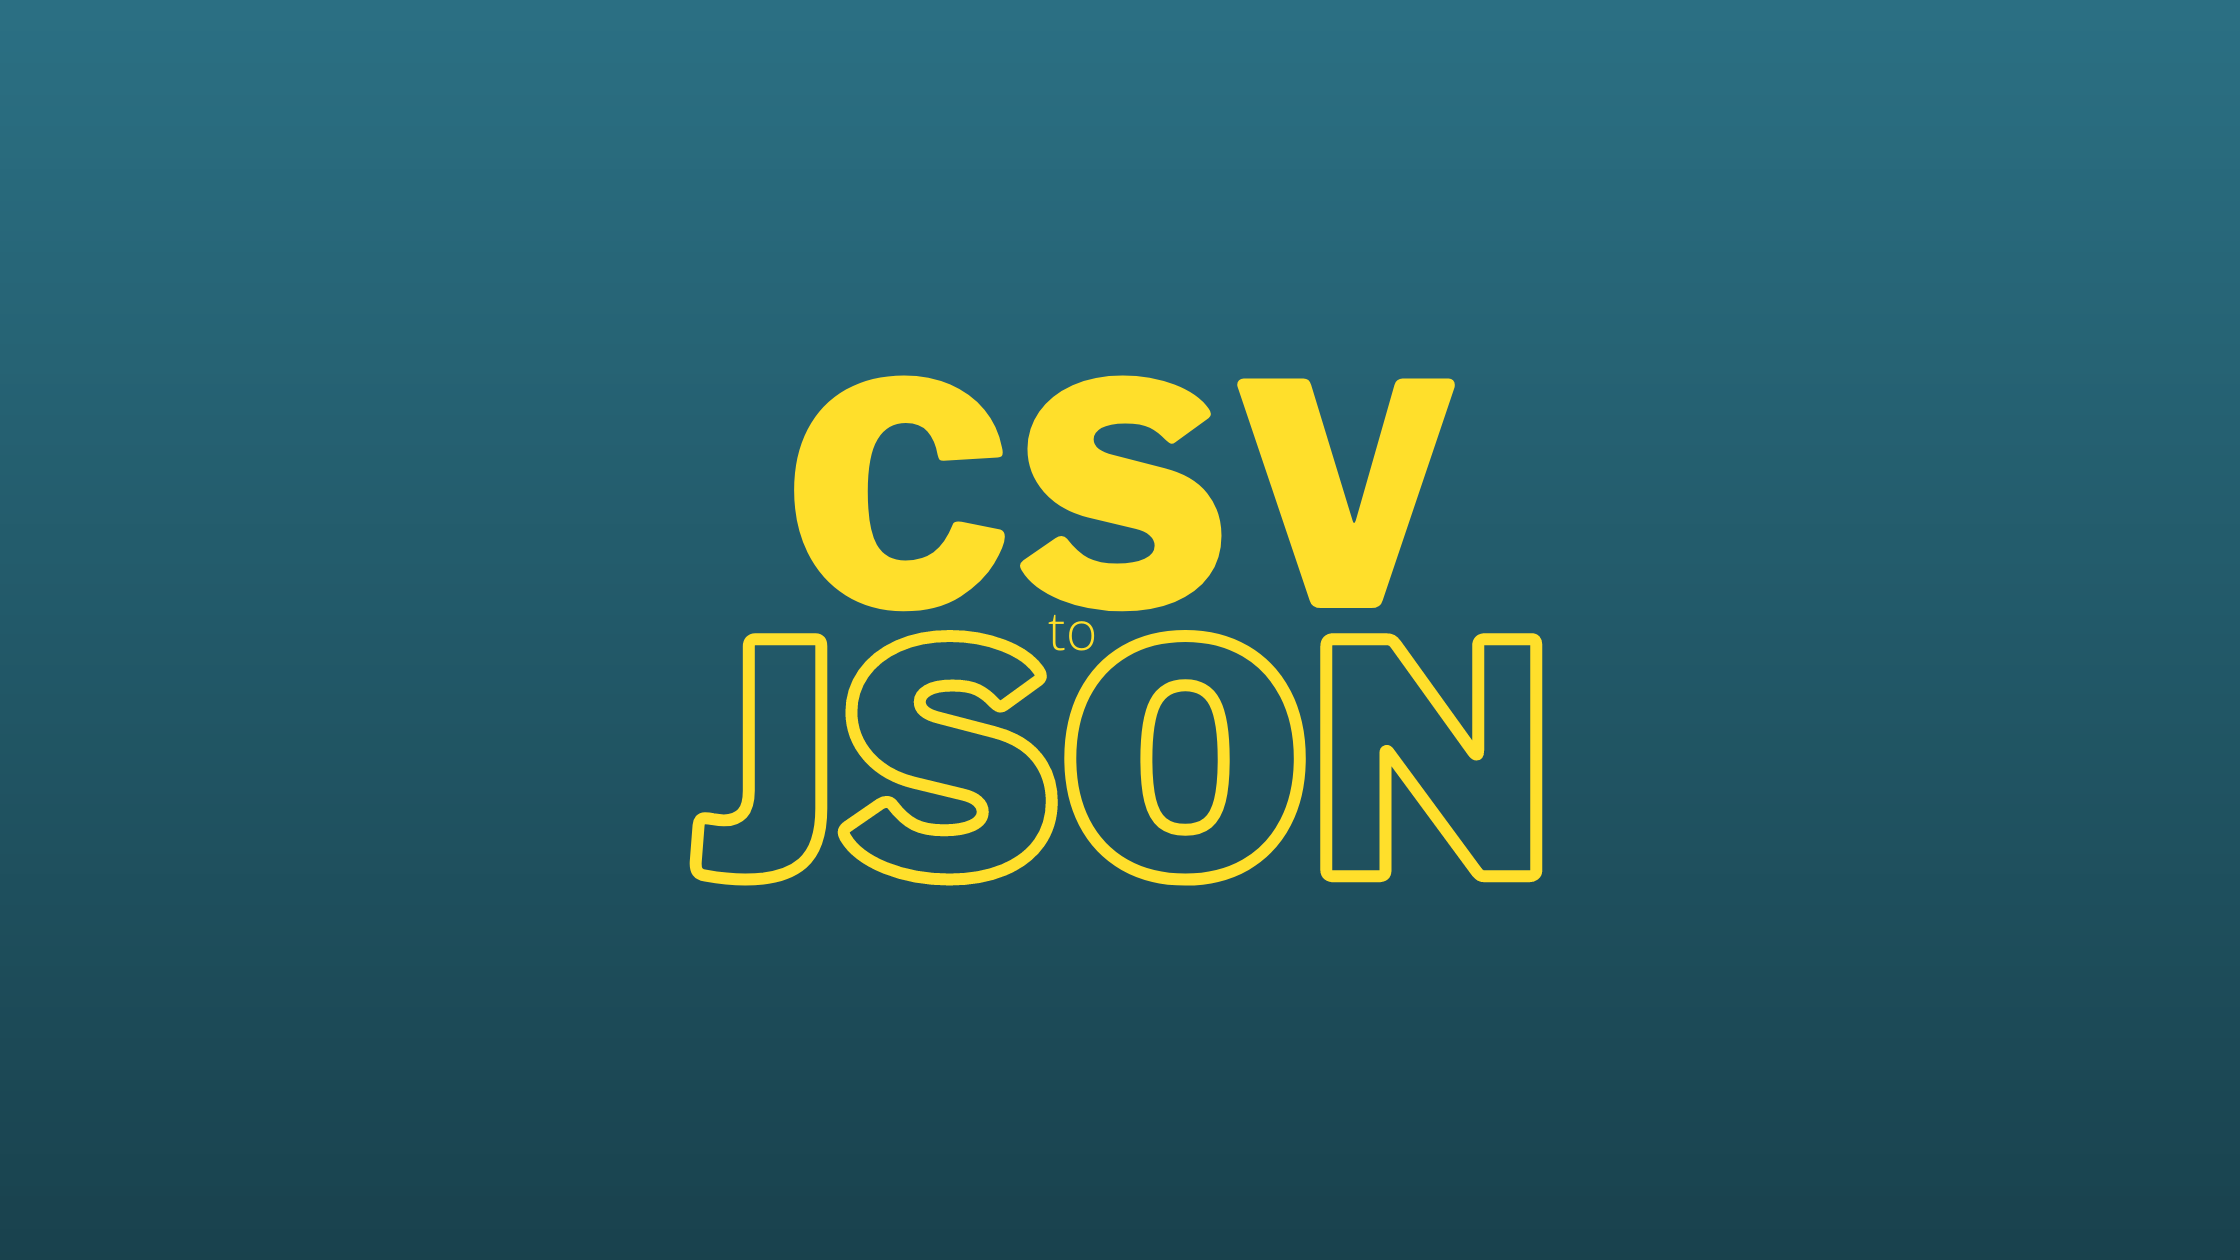 CSV to JSON format converter tool